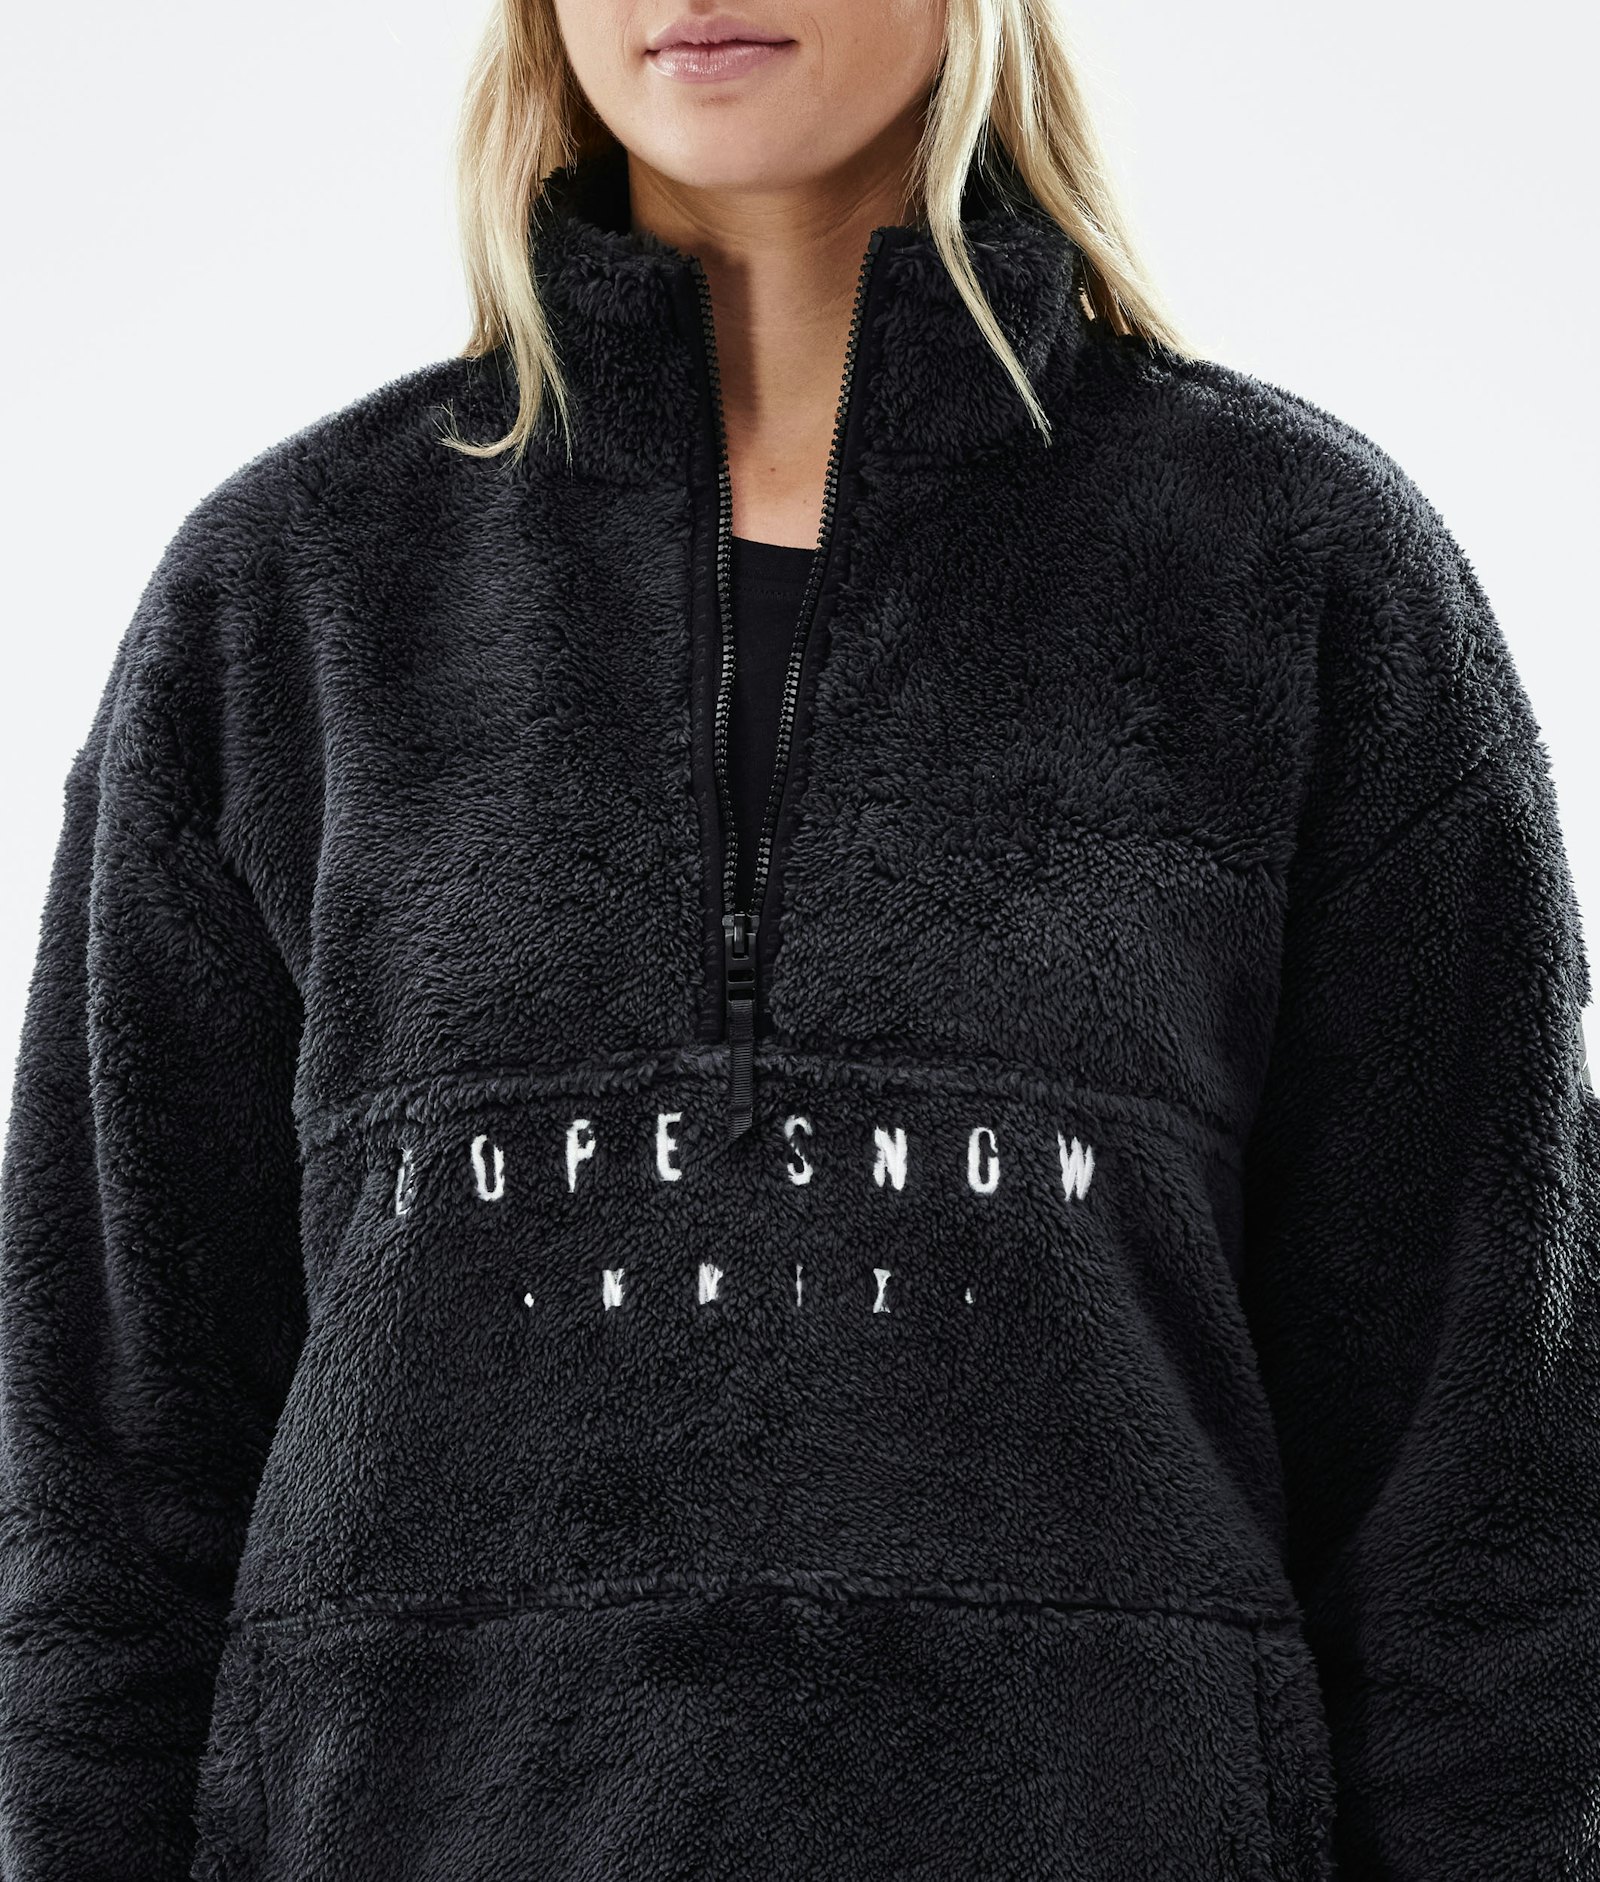 Pile W 2021 Fleece Sweater Women Phantom